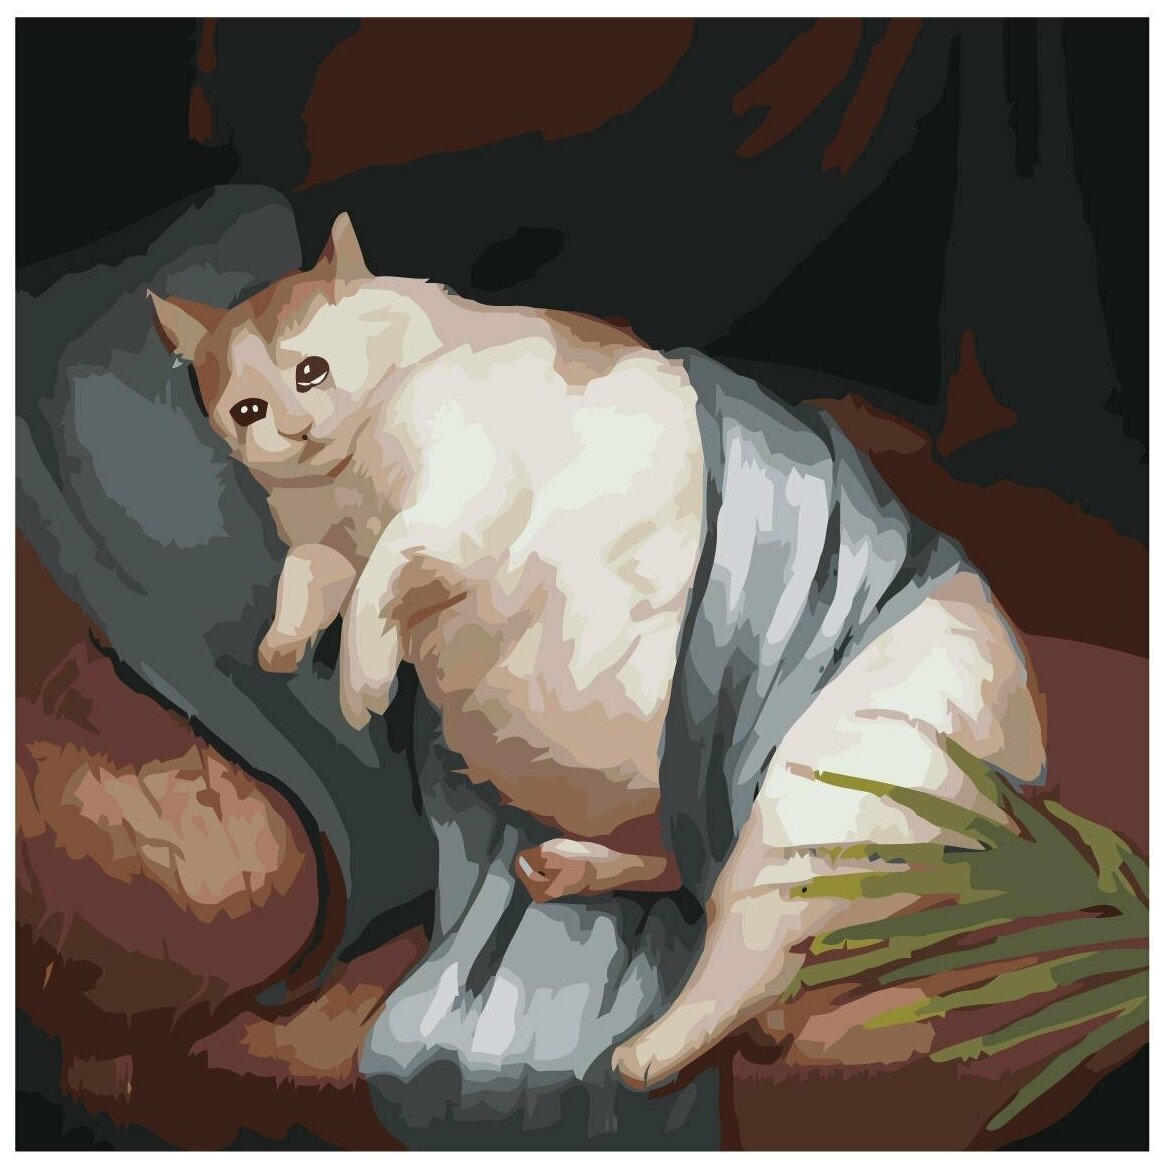 Толстый котик Раскраска картина по номерам на холсте